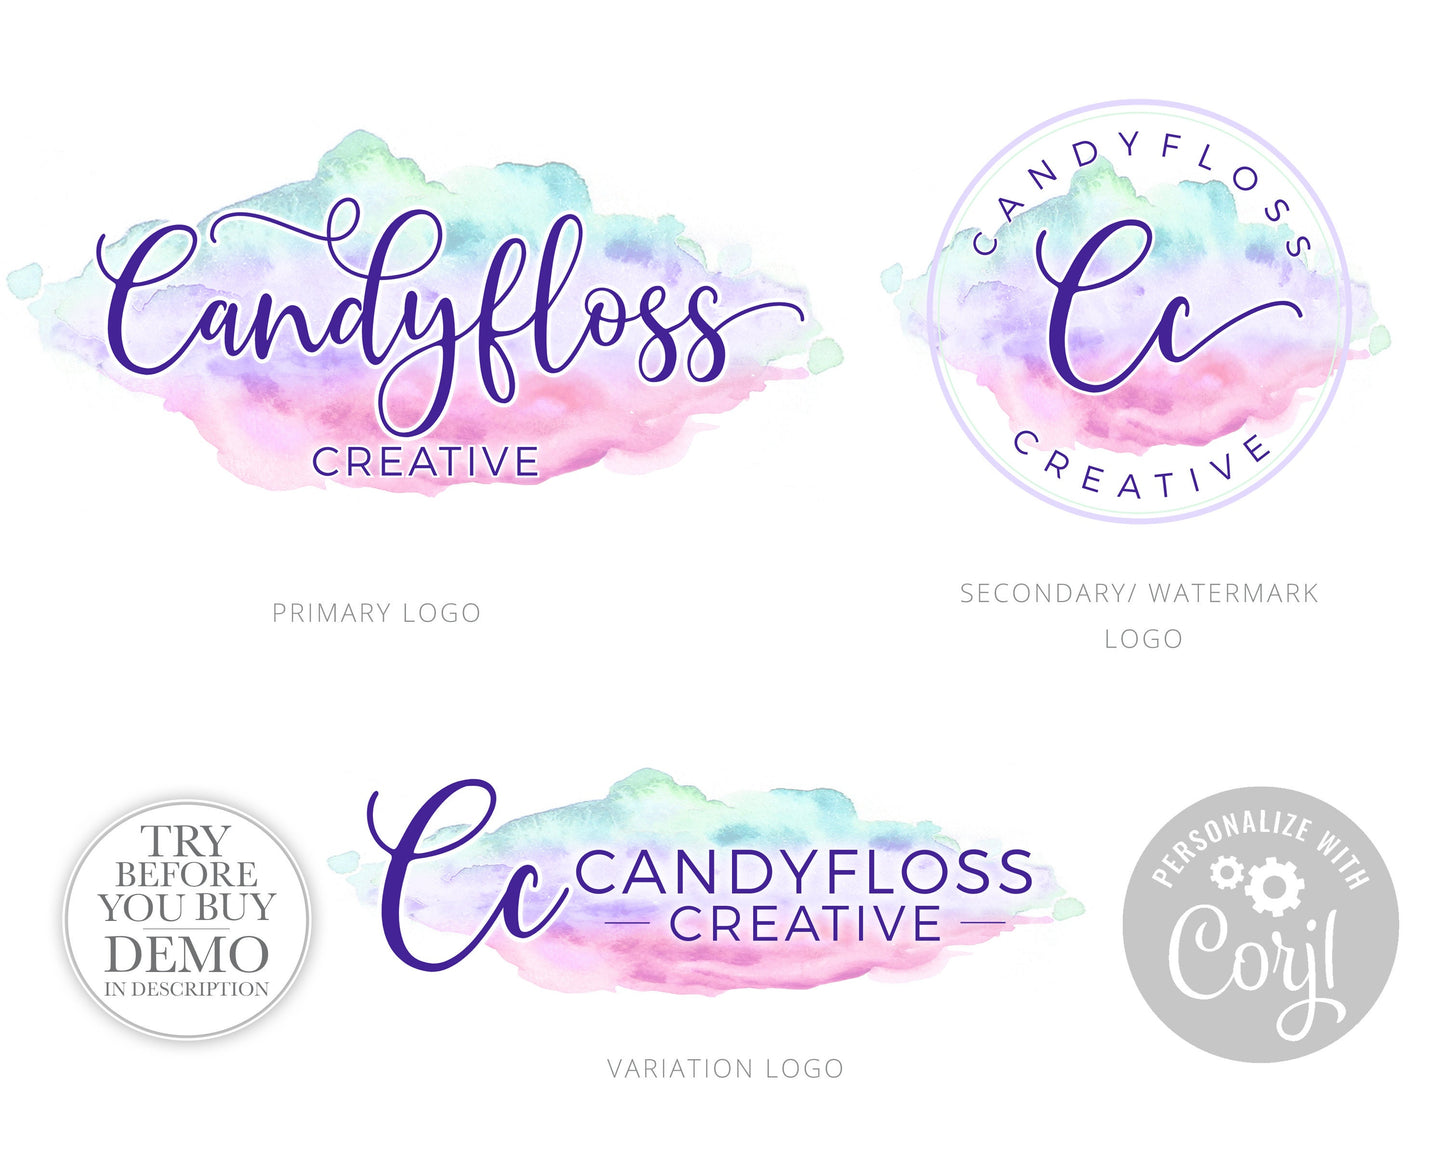 Editable 4pc Logo Suite & Business Card Instant Download Branding Kit Candyfloss Pastel Watercolor  |  Premade Logo | Edit Online  CF-001